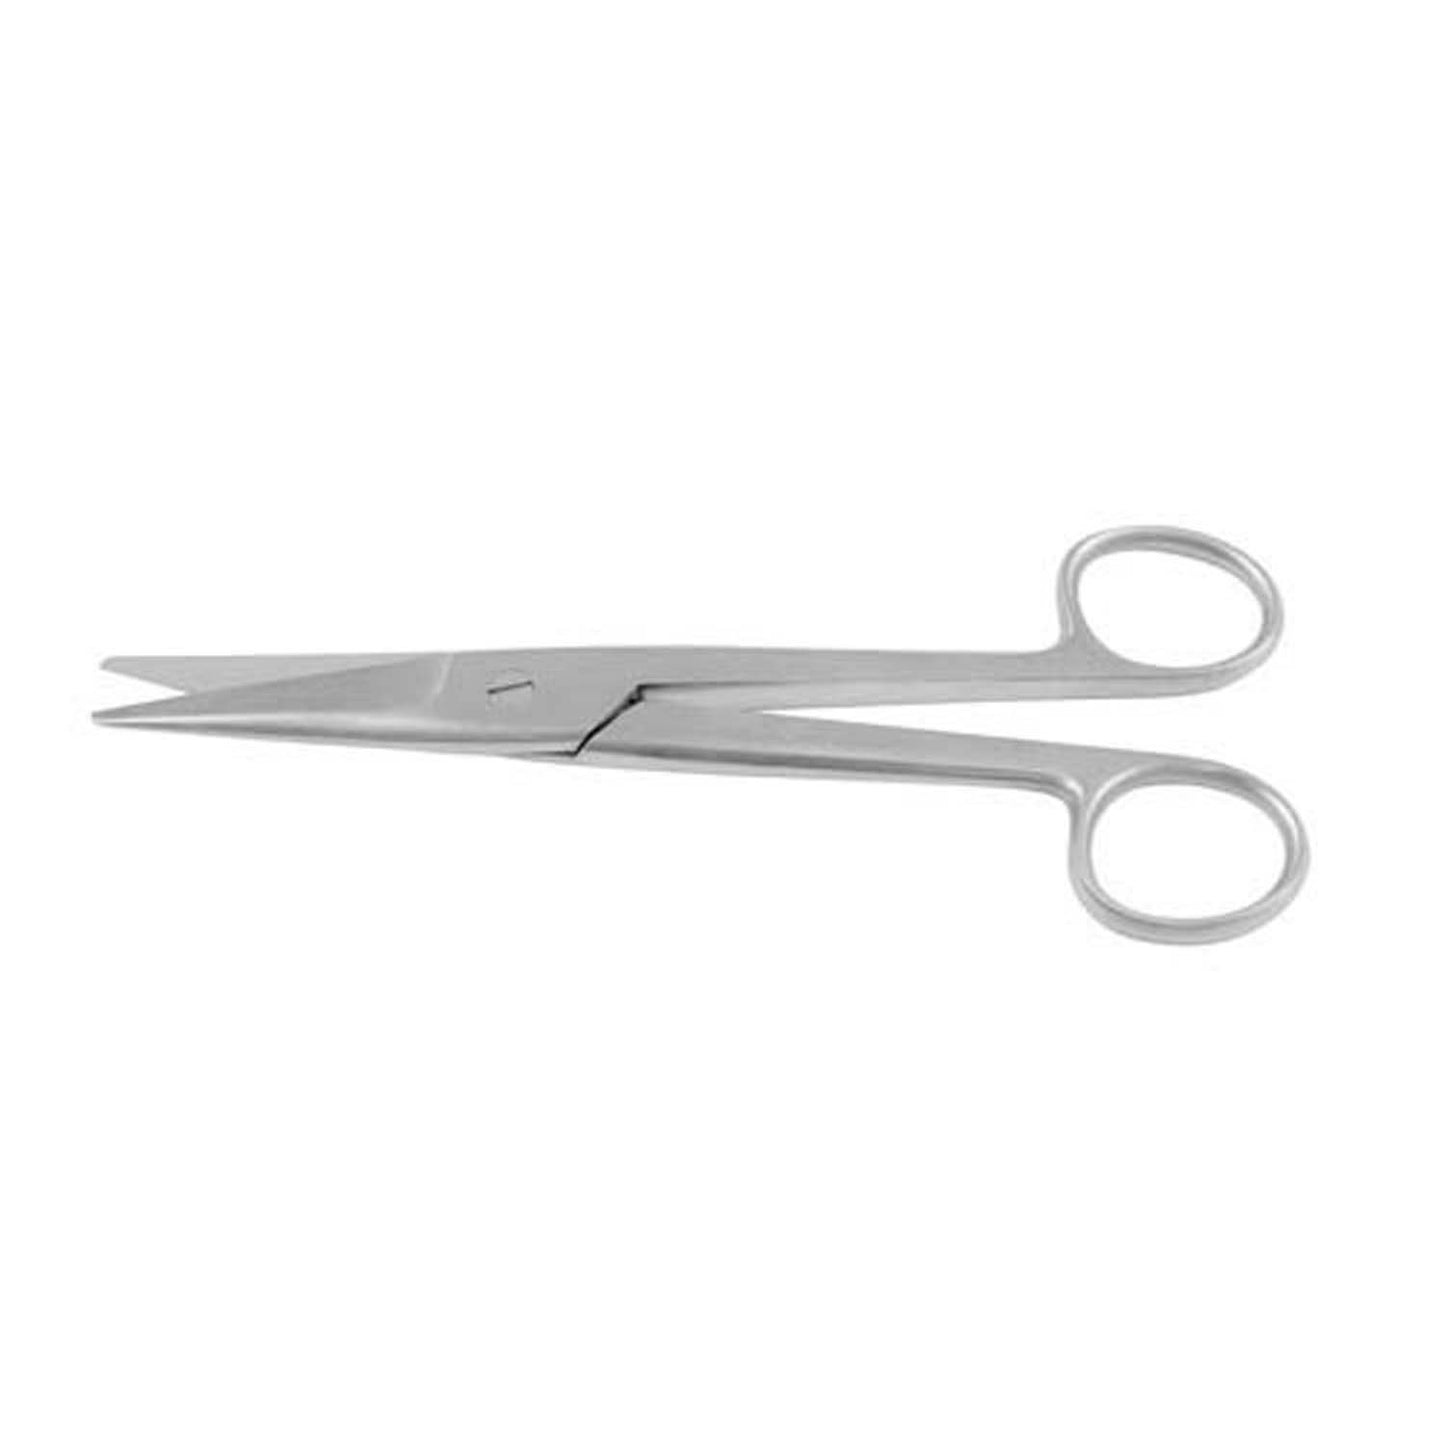 Mayo-noble Dissecting Scissors